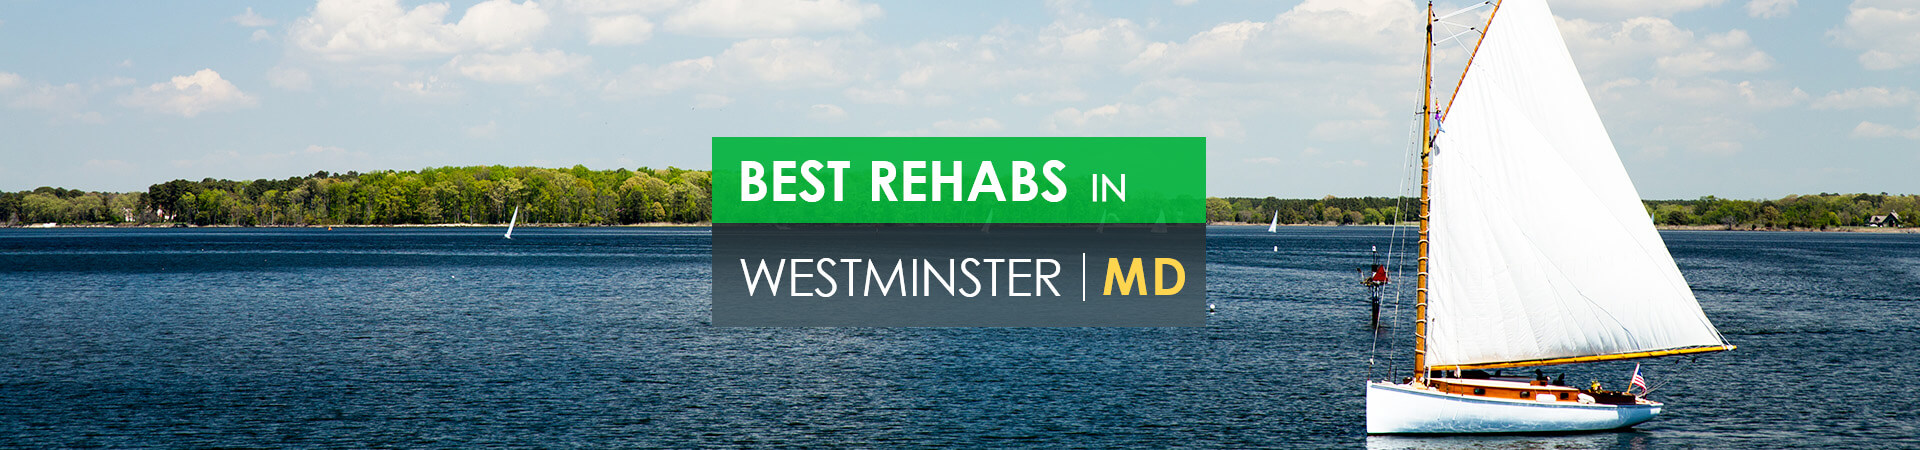 Best rehabs in Westminster, MD